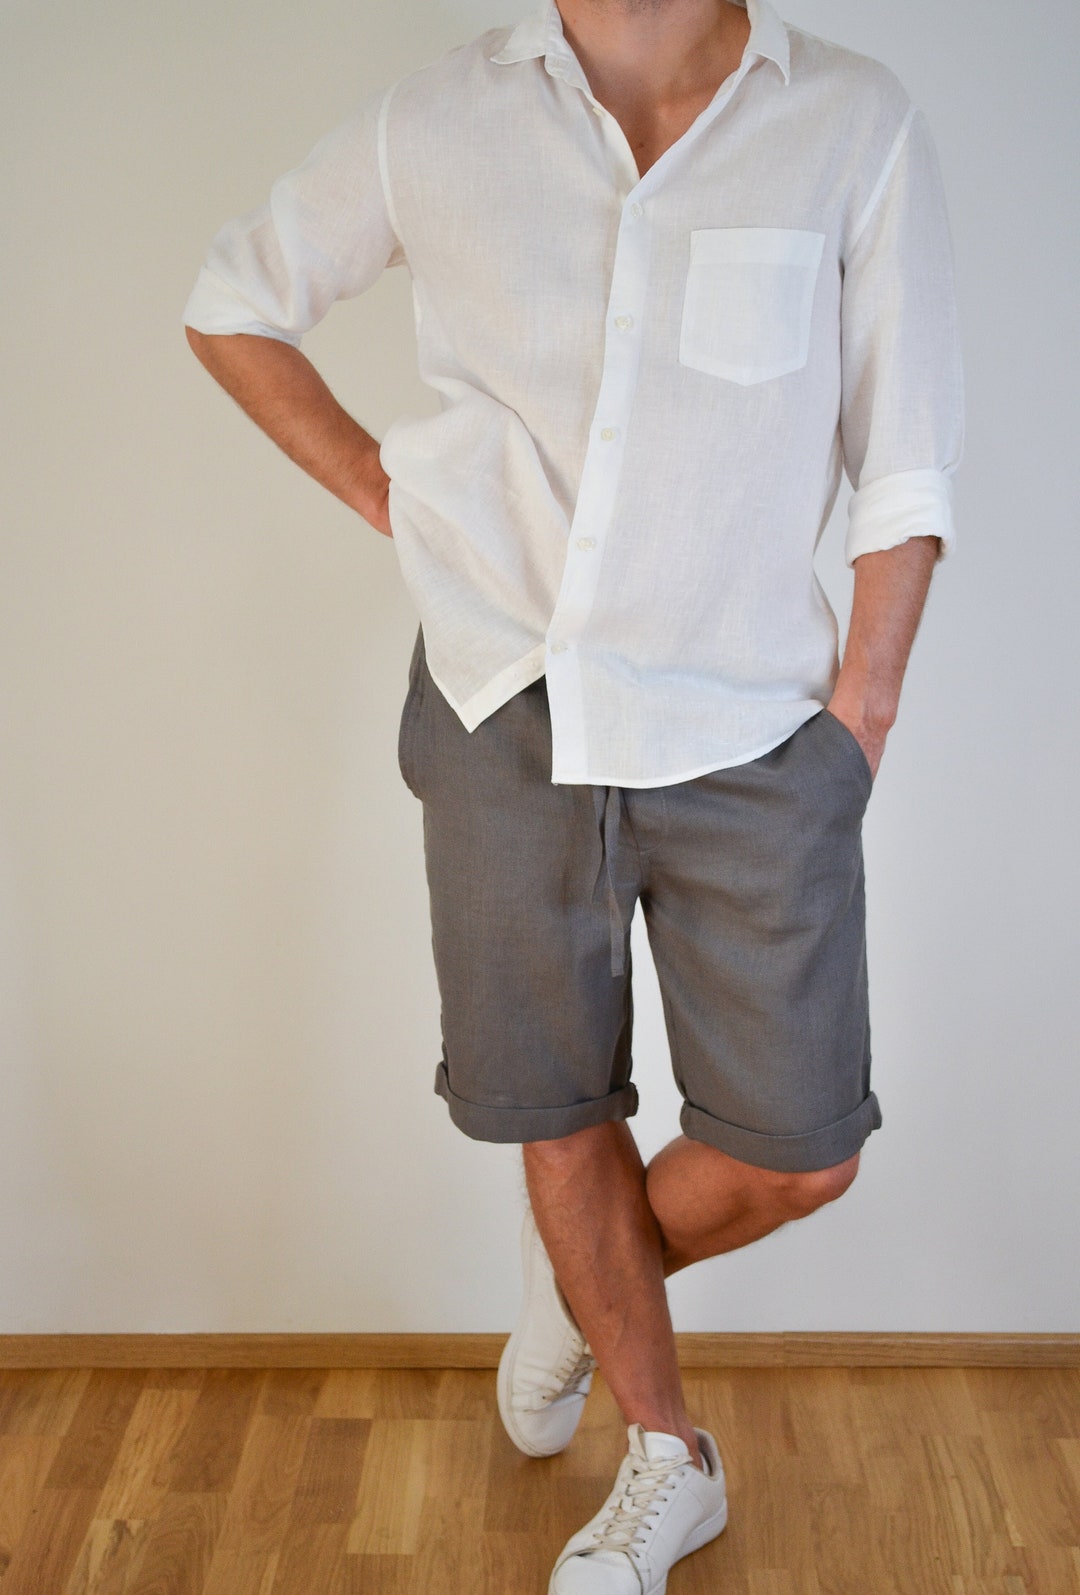 Mens Linen Shorts, Grey Linen Shorts, Shorts With Pockets, Summer